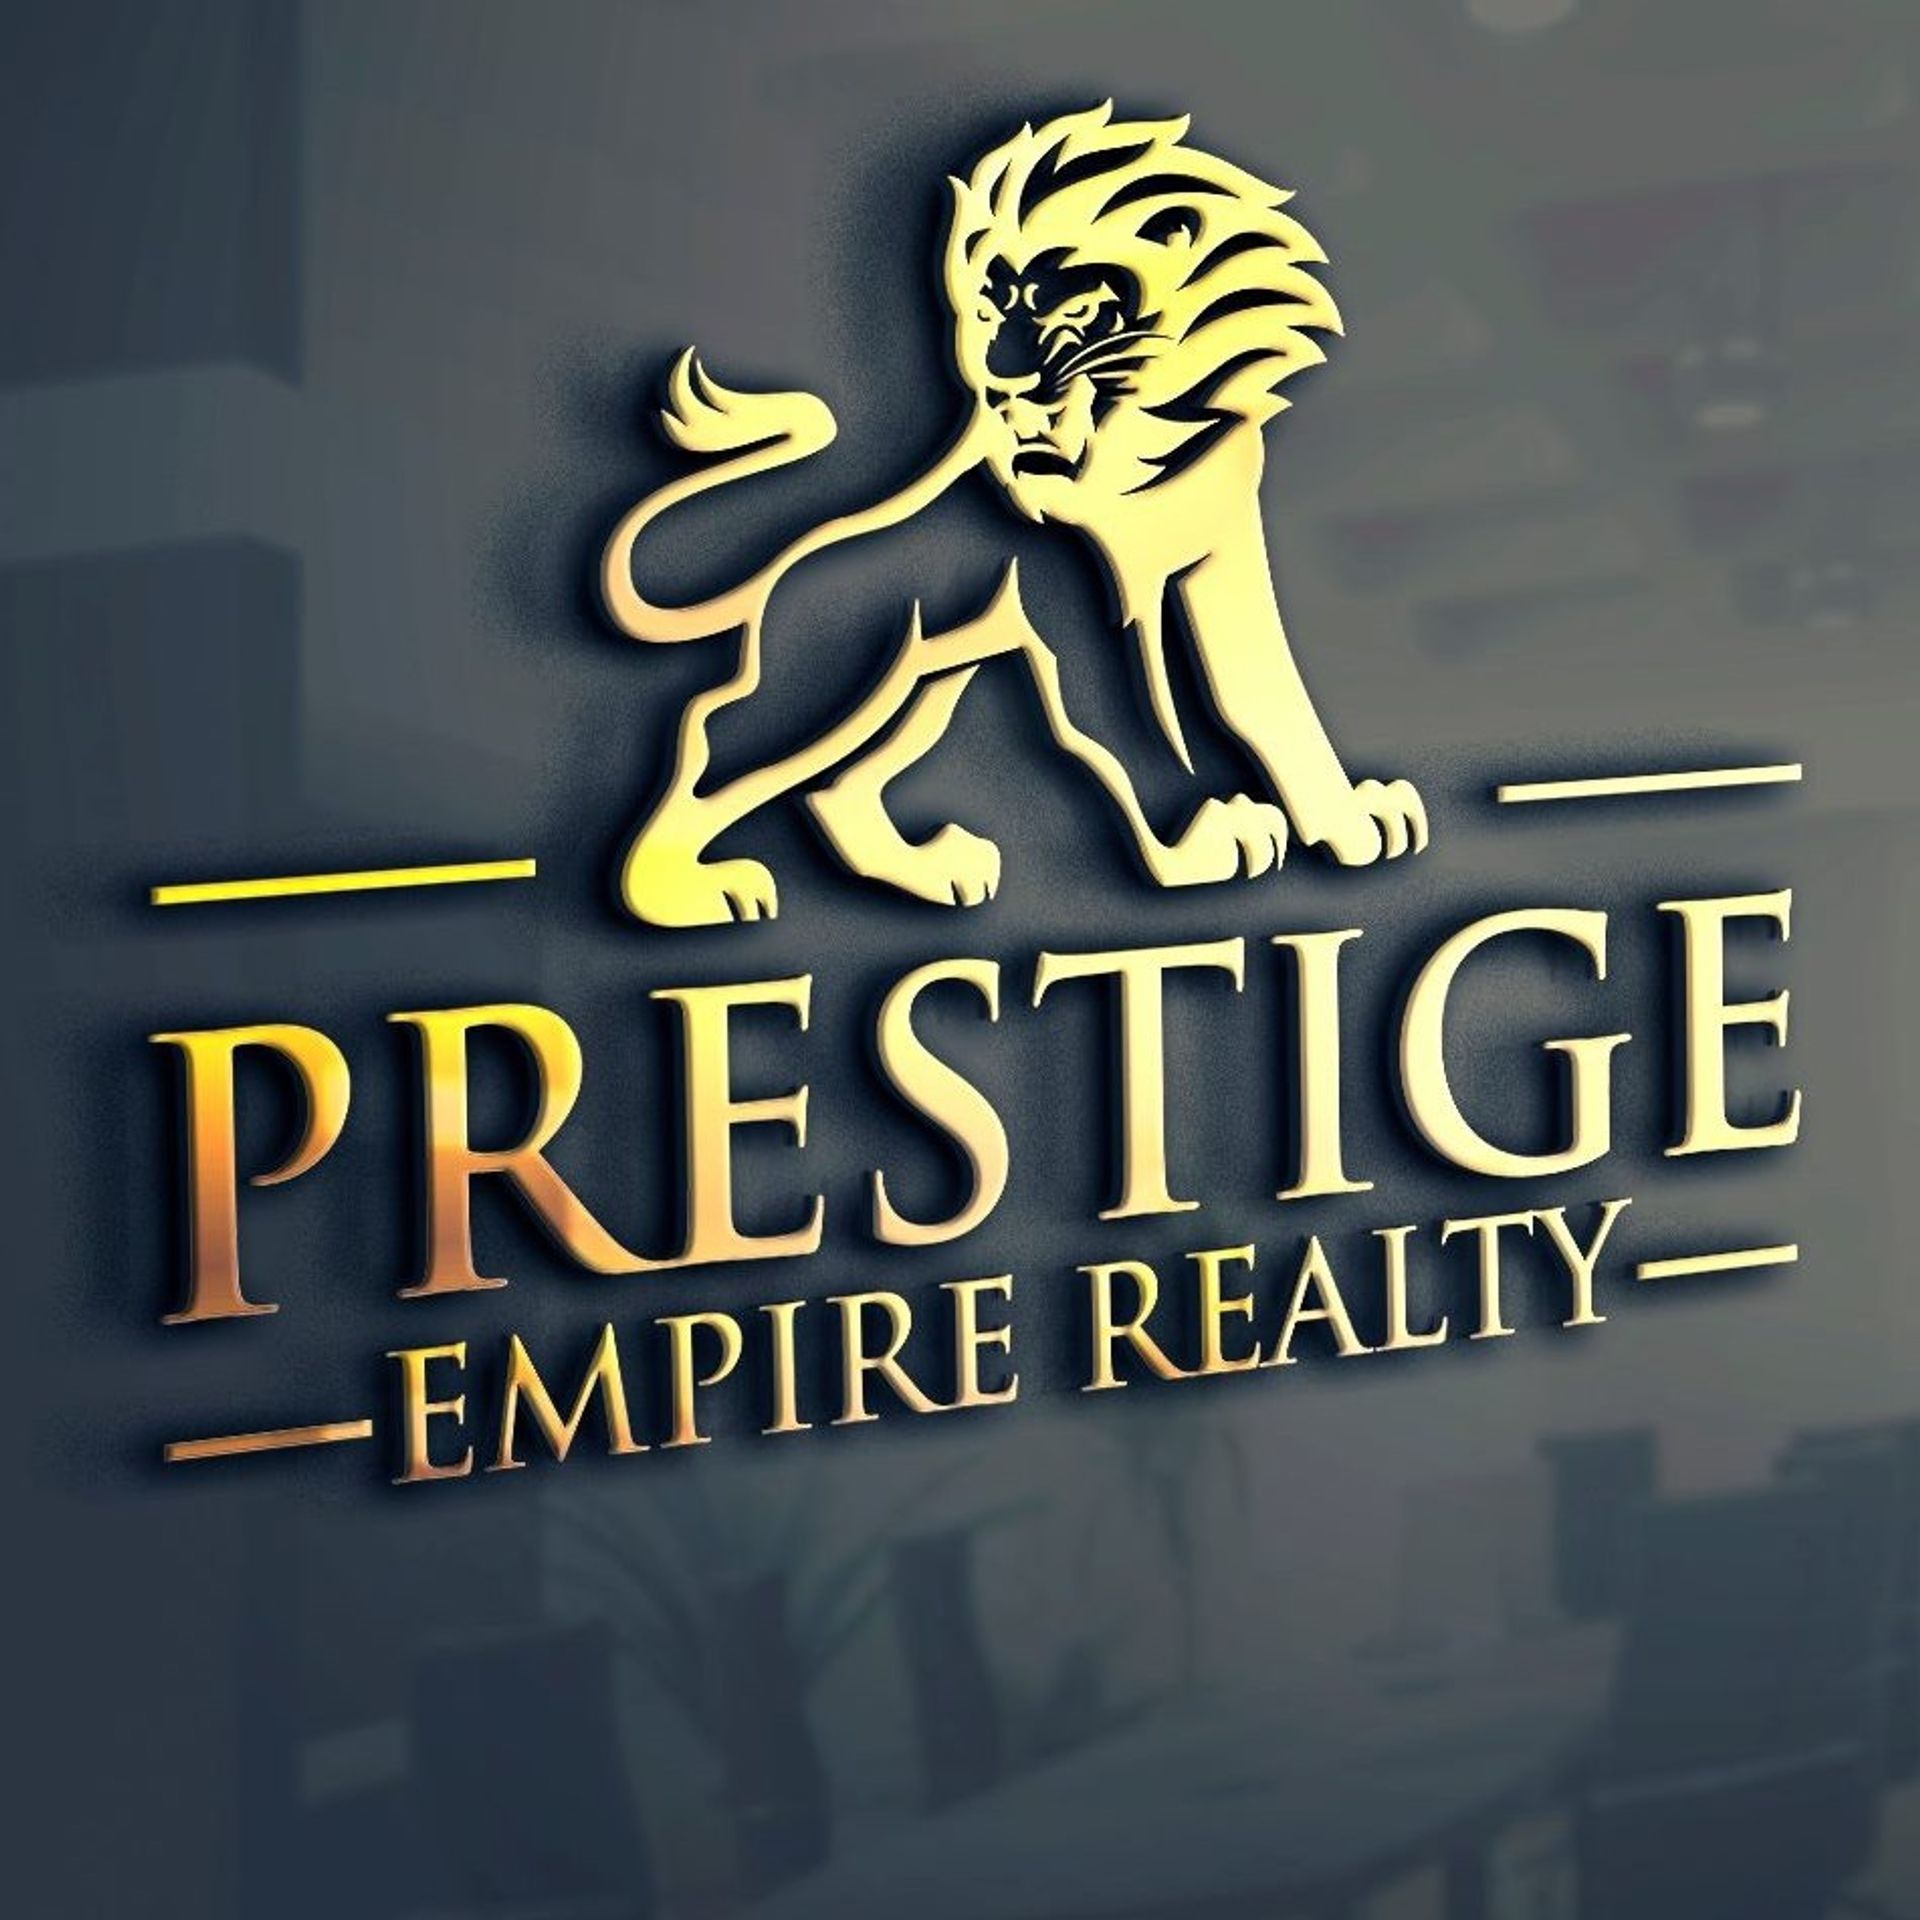 Prestige Empire Realty